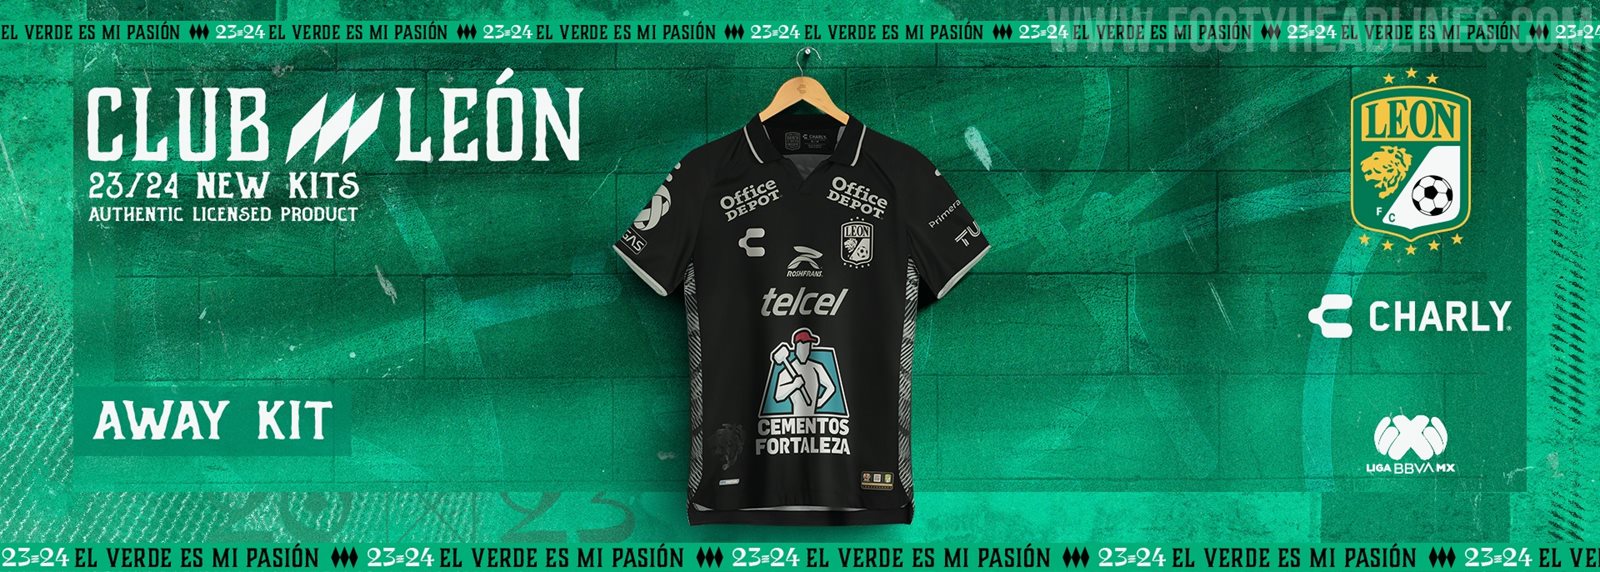 Request] León Kit edición especial mundial de clubes 2023. : r/WEPES_Kits